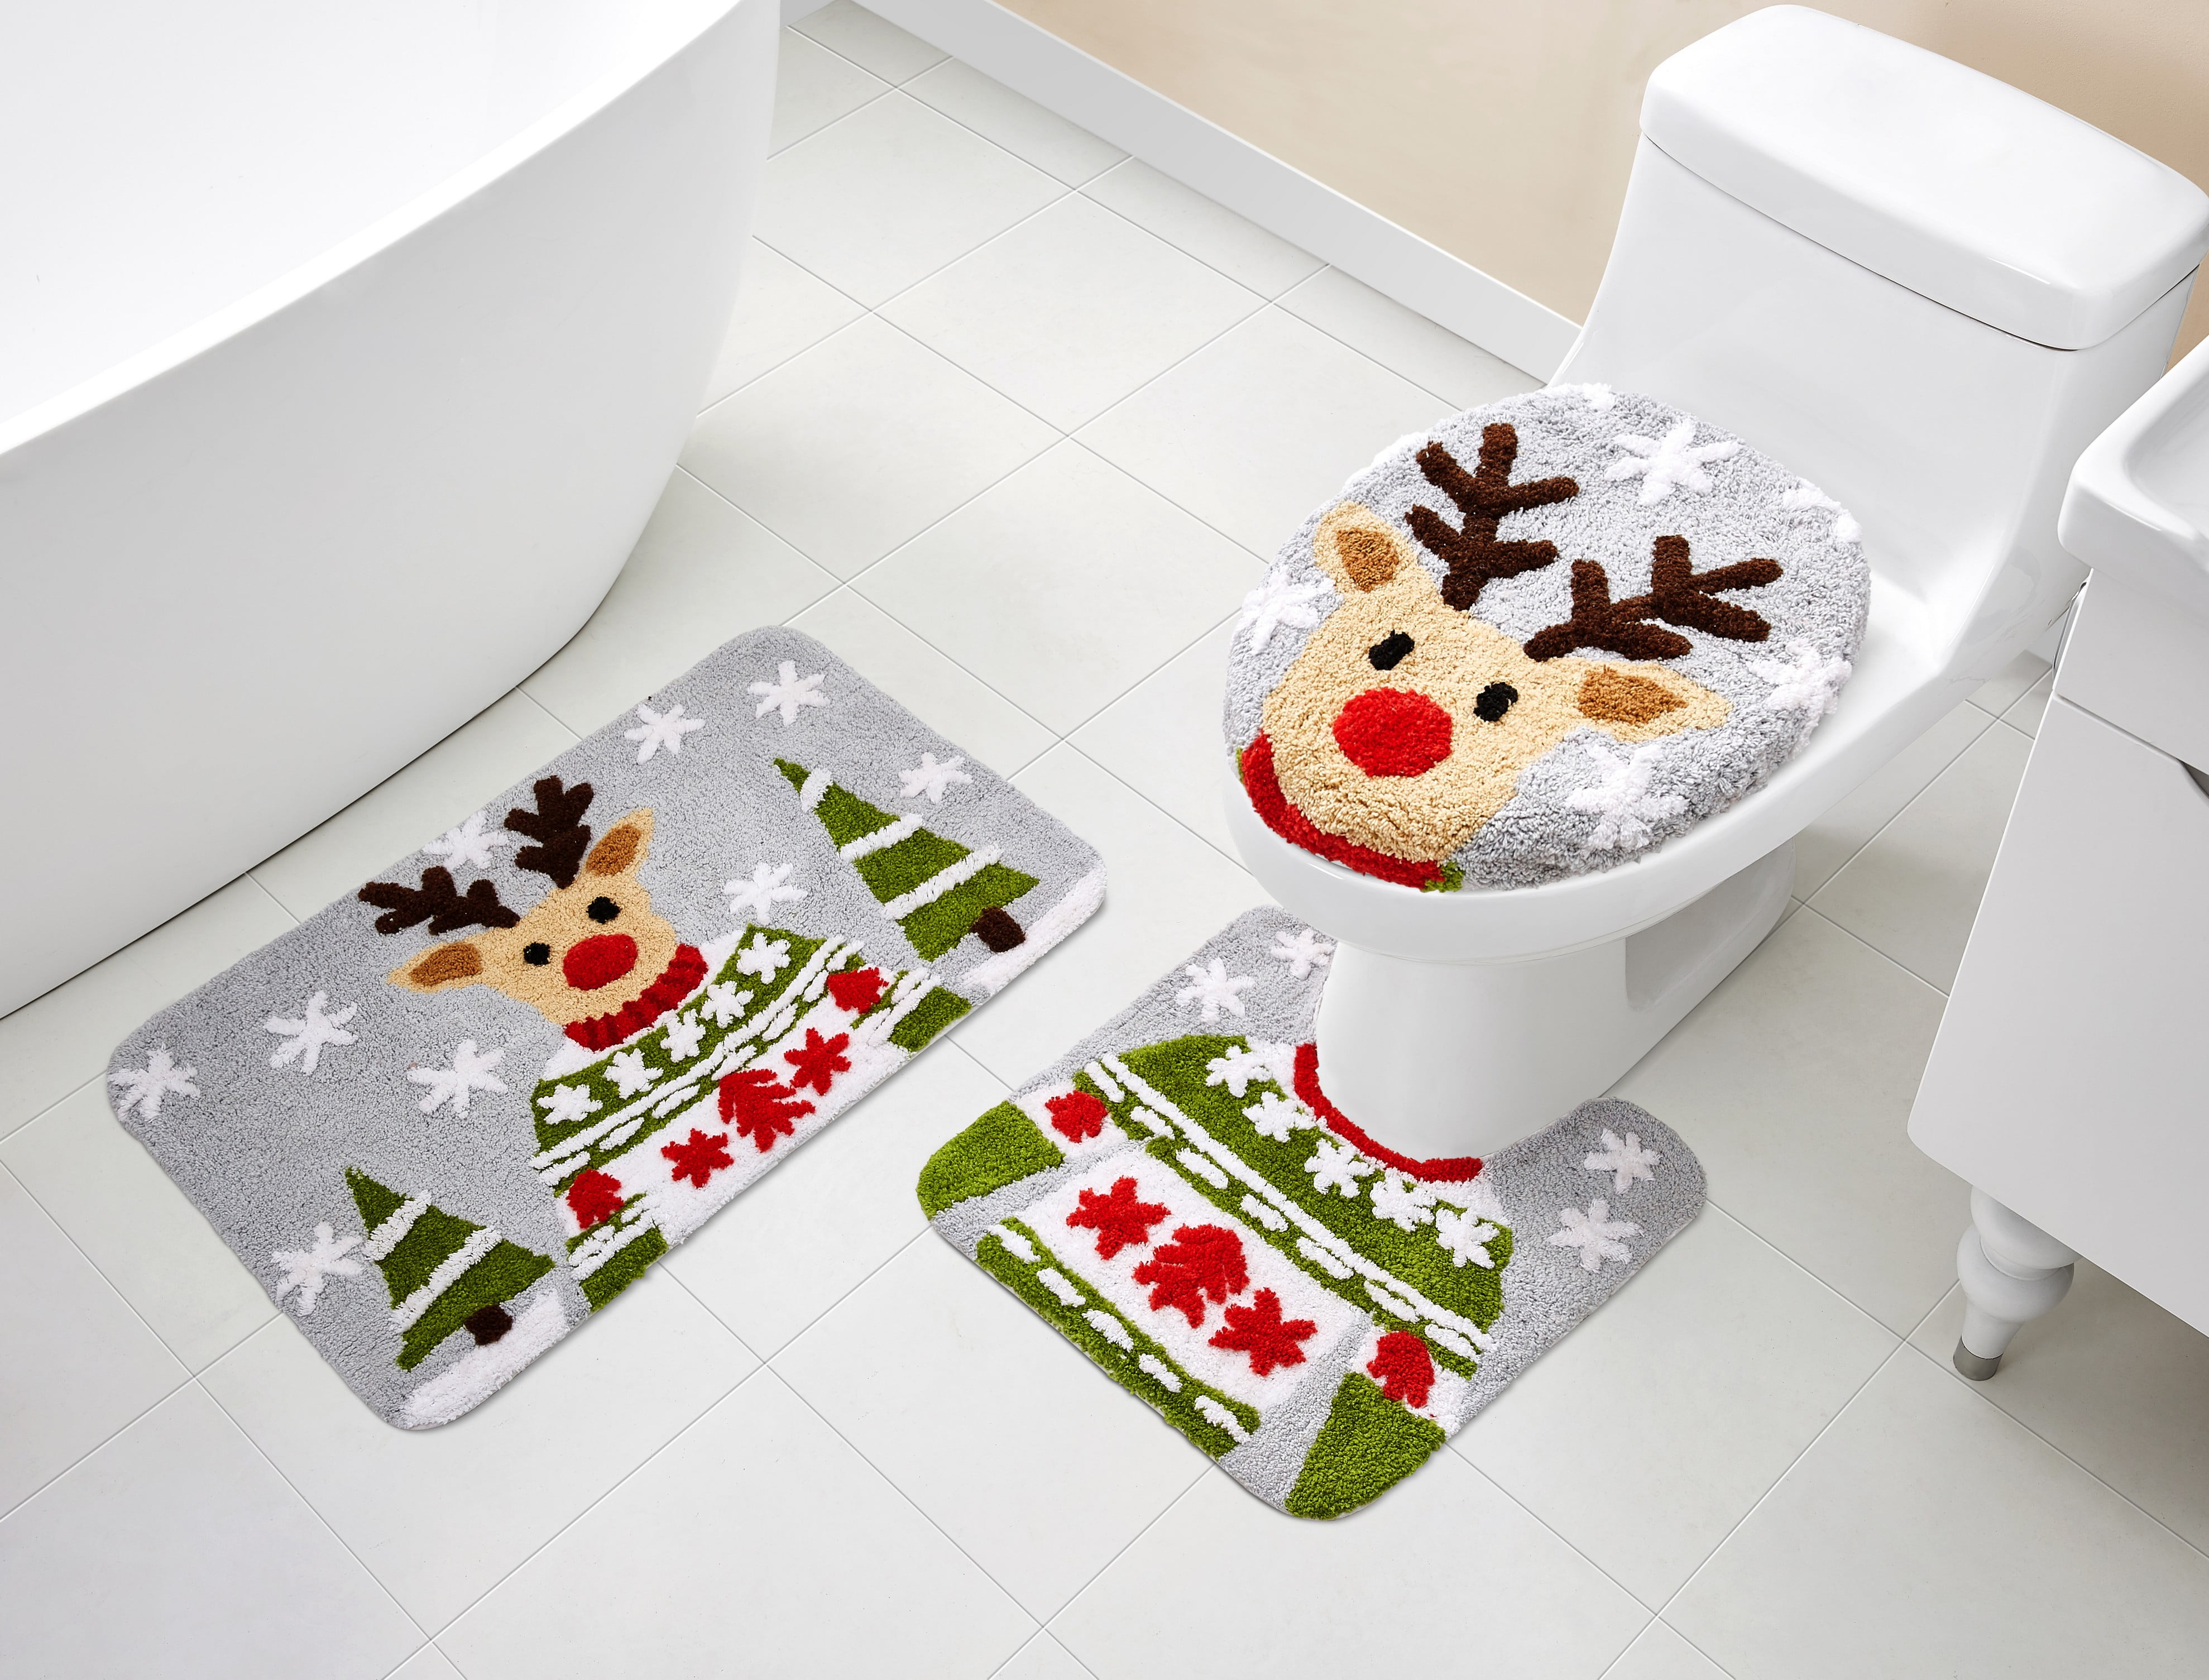 Women Trend 3 Piece Bath Rugs Set Christmas Elements Santa Claus Presents Reindeer Non-Slip Bathroom Mats Absorbent Contour Soft Mat Toilet Lid Cover Bathroom Decor Set 18x30+14x18+15x18